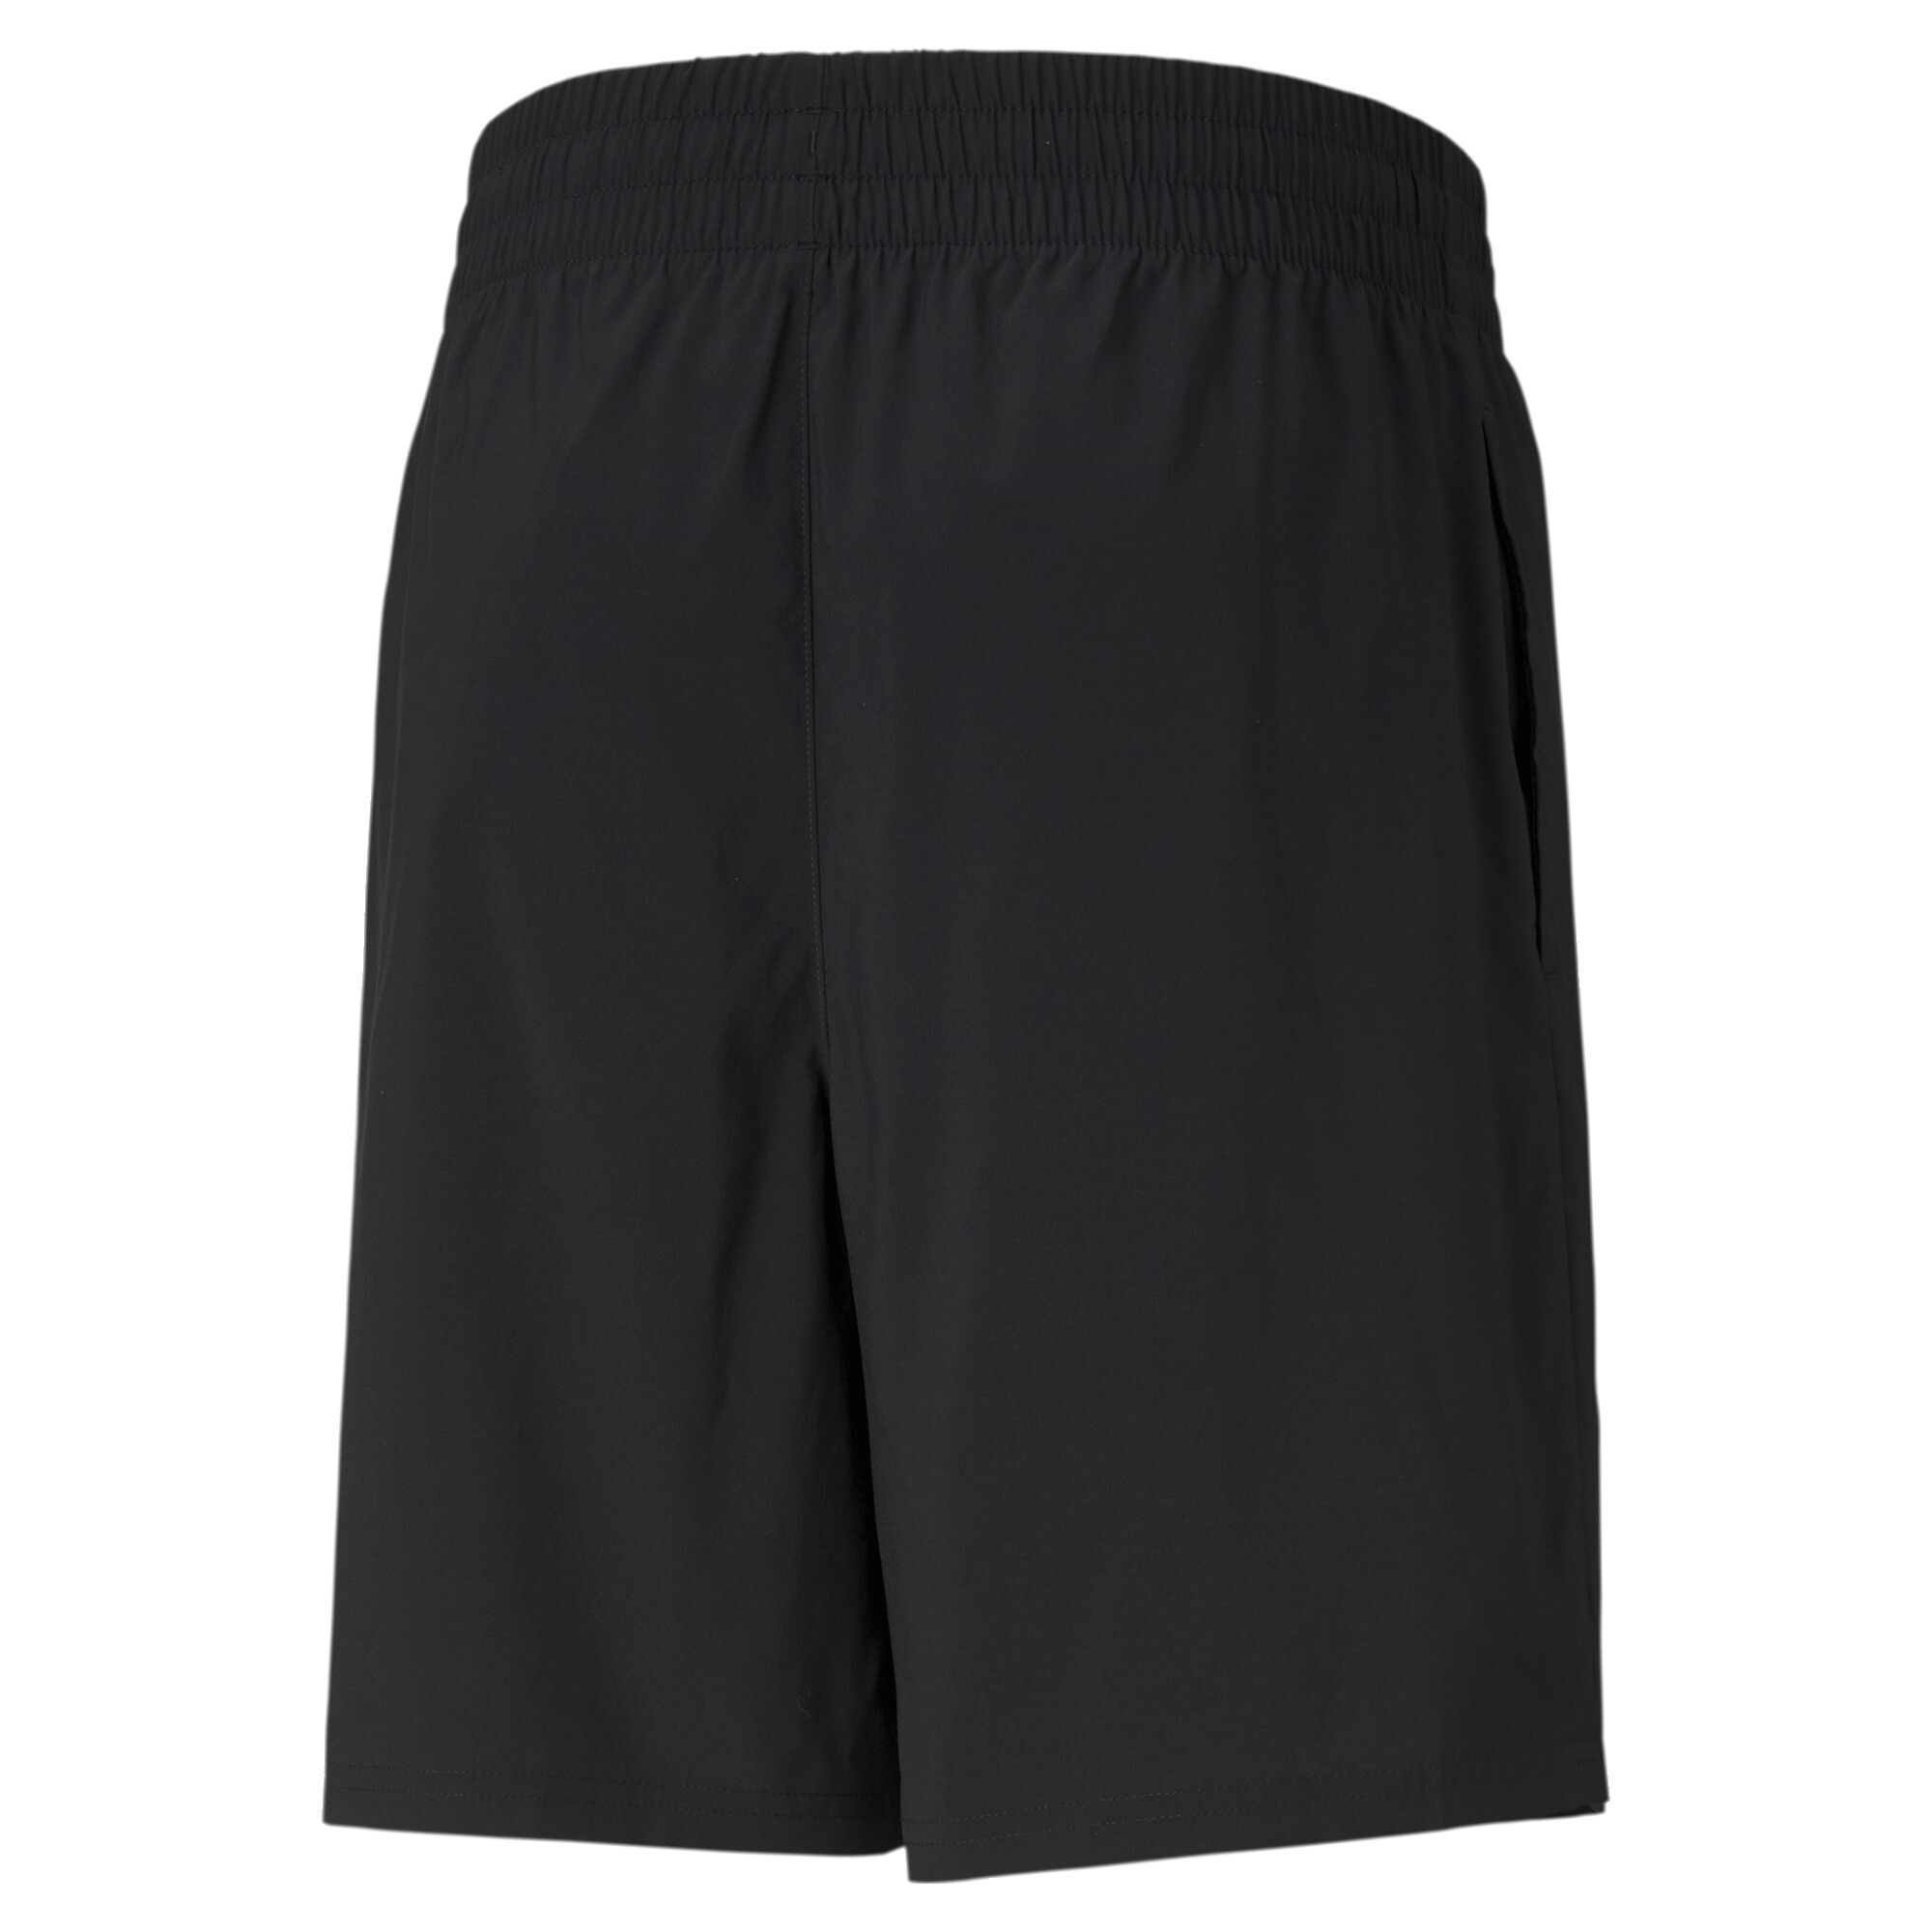 Men's Puma Favourite Blaster 7's Training Shorts, Black, Size M, Clothing